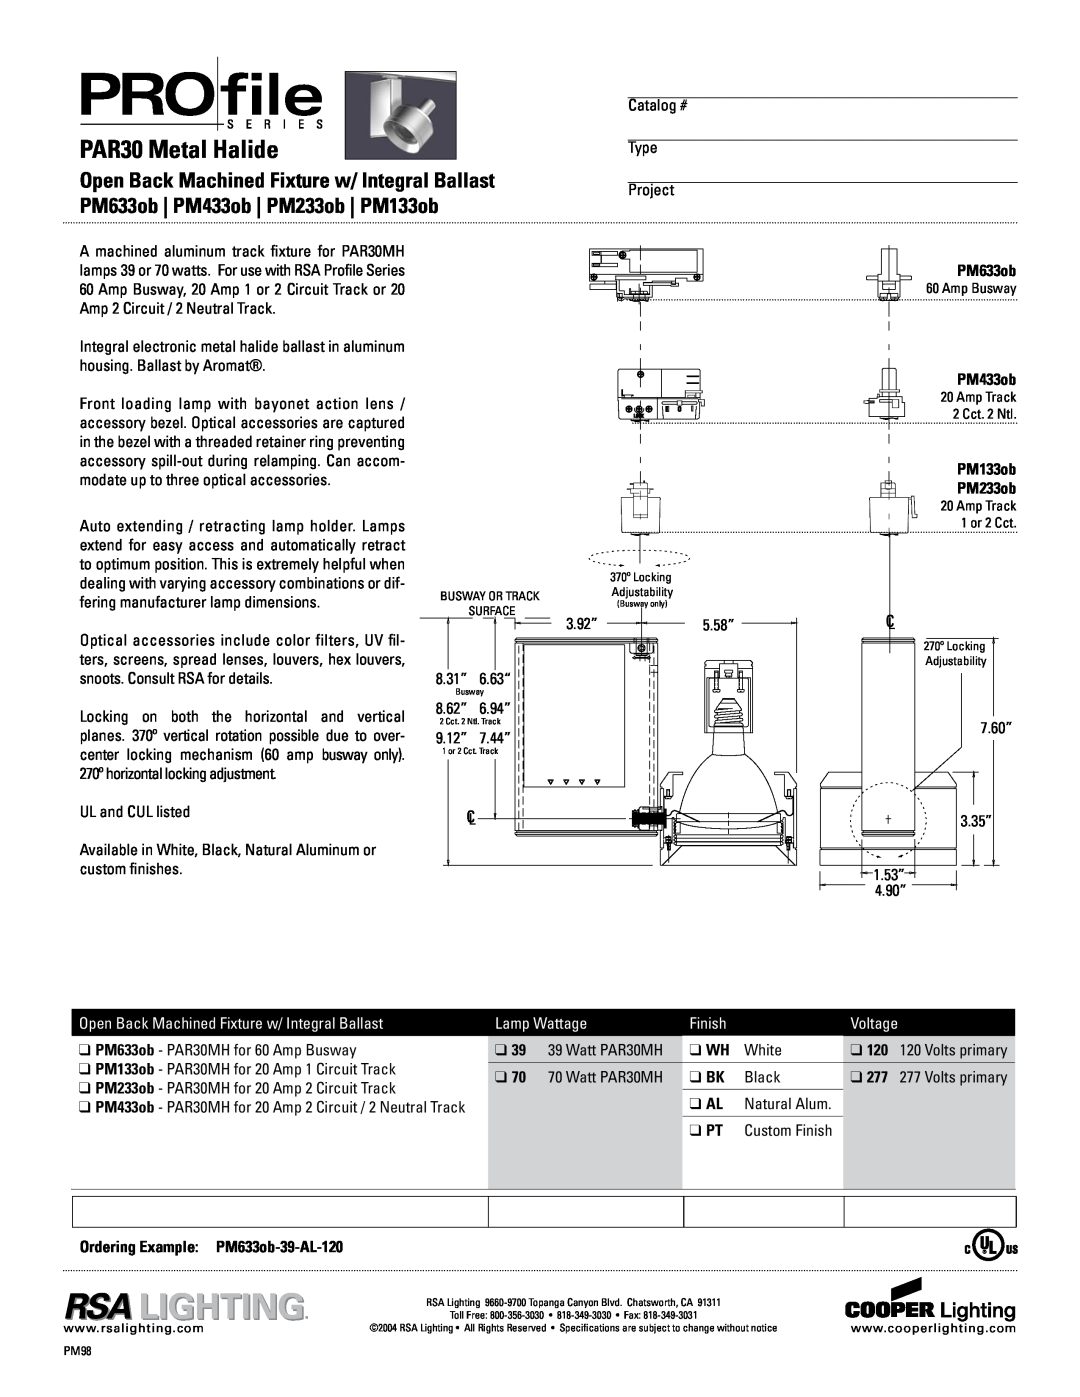 Cooper Lighting PM433ob specifications PAR30 Metal Halide, Open Back Machined Fixture w/ Integral Ballast, Lamp Wattage 